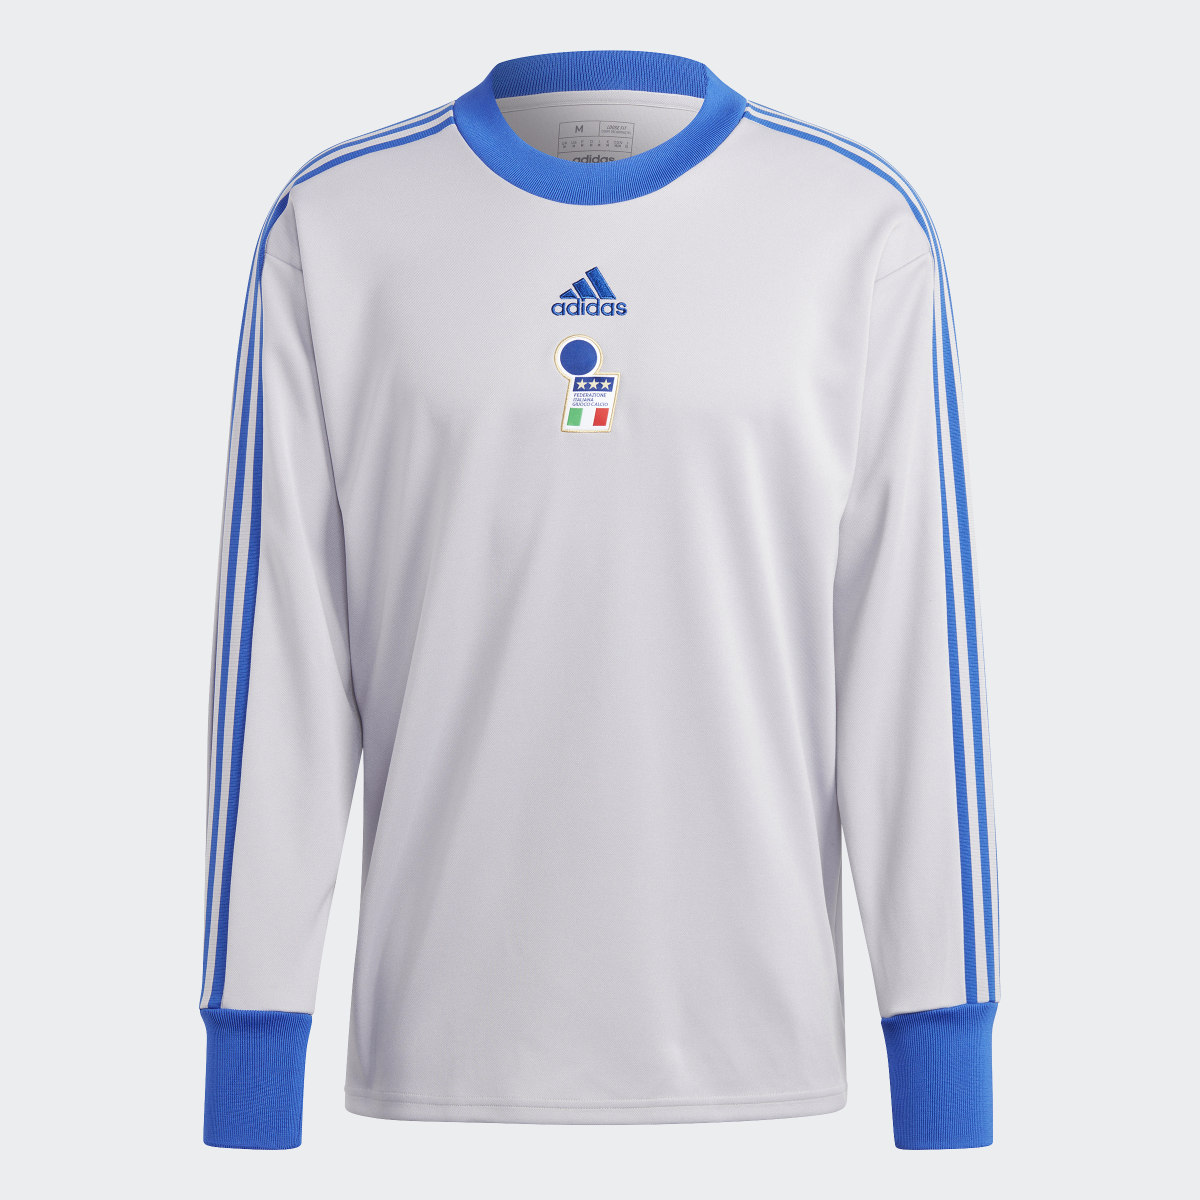 Adidas Italy Icon Goalkeeper Jersey. 5